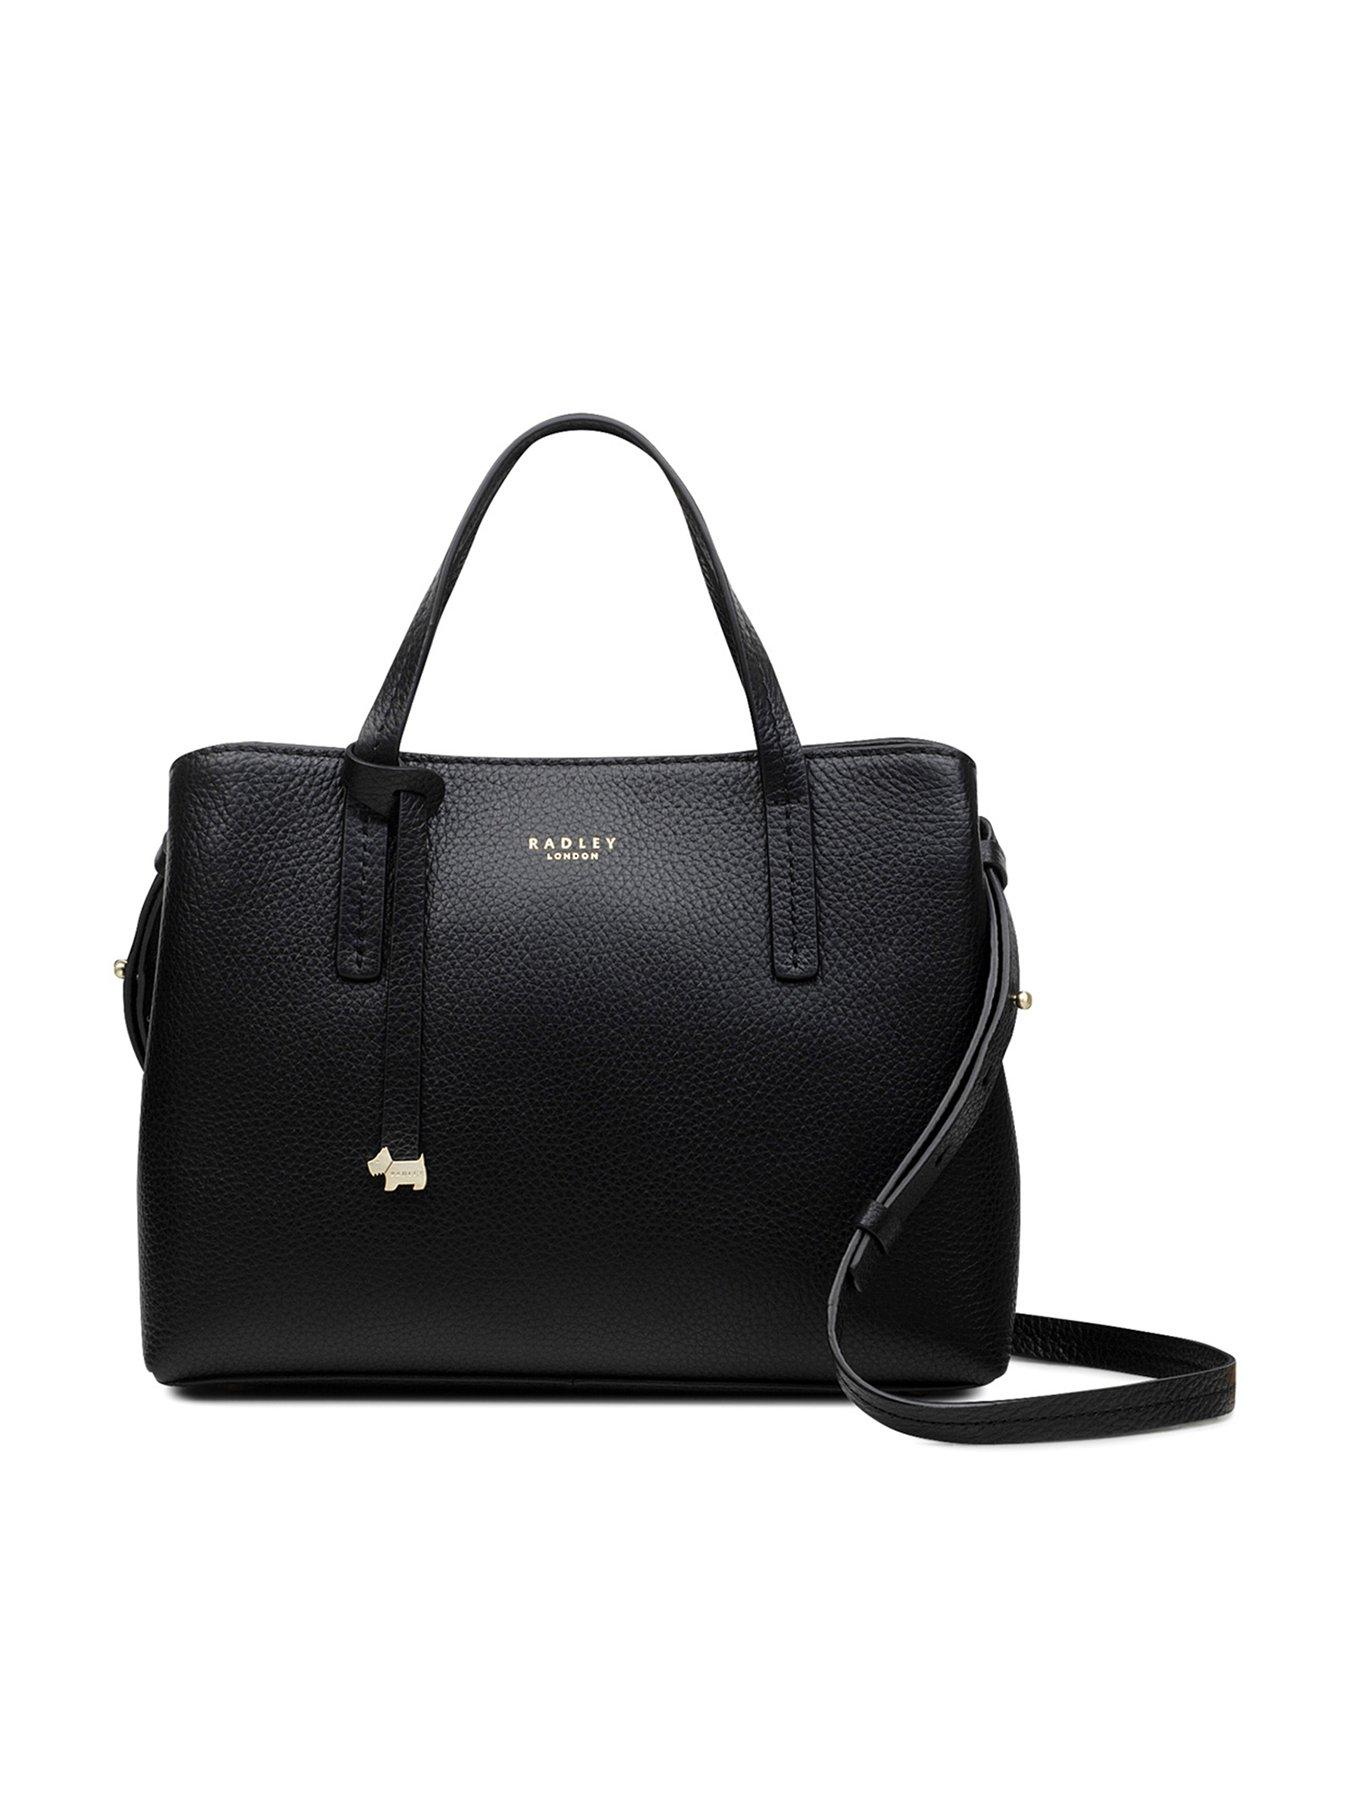 RADLEY London Beautiful Black Soft Leather Grab Shoulder Bag / Handbag.